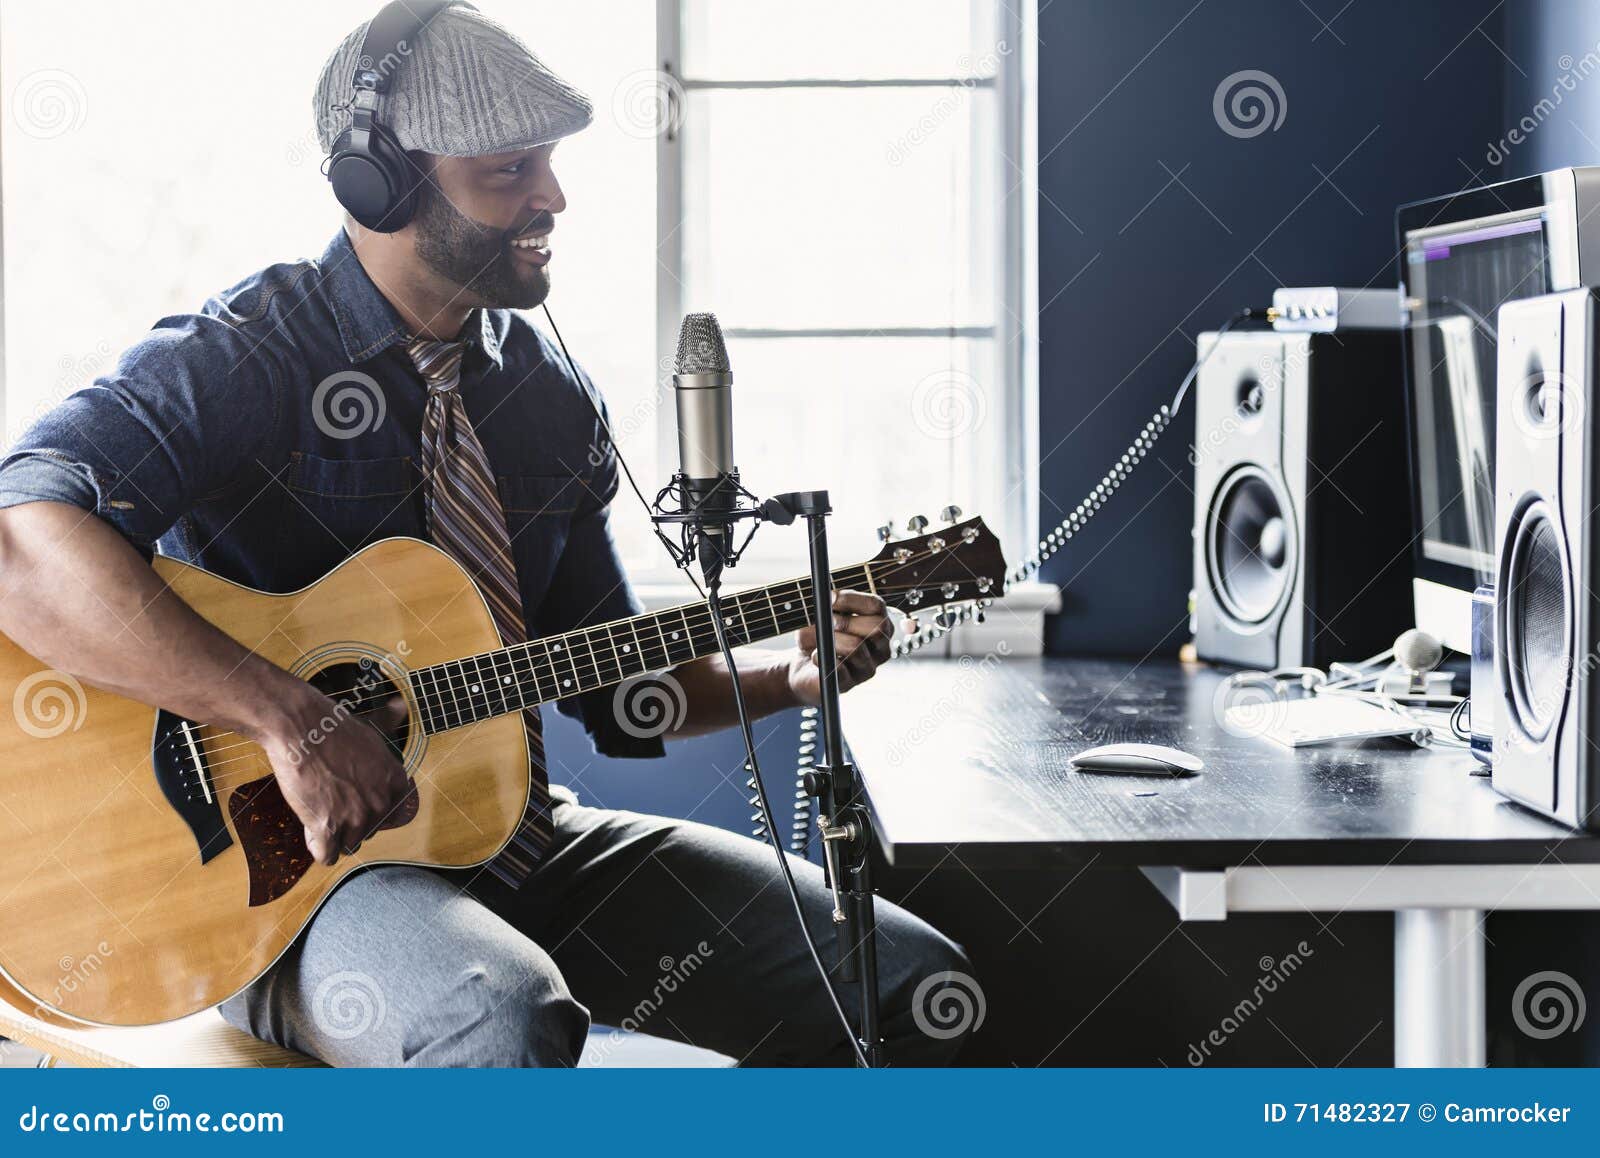 musician home recording